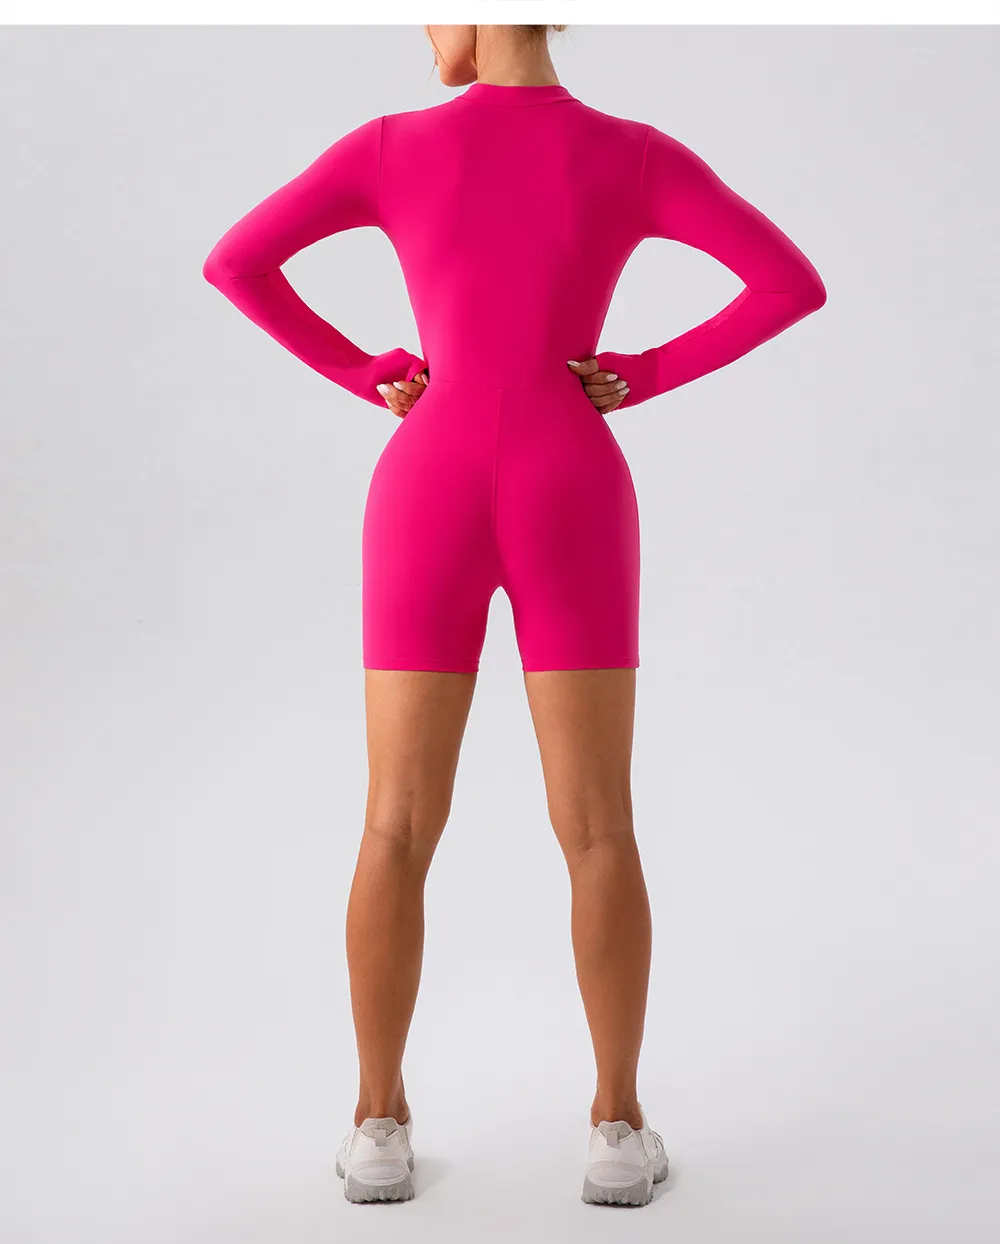 AL0YOGA-54 Womens Zipper Long Sleeve Jumpsuit Dance Training Fitness Exercise Jumpsuit Sexy Yoga Suit